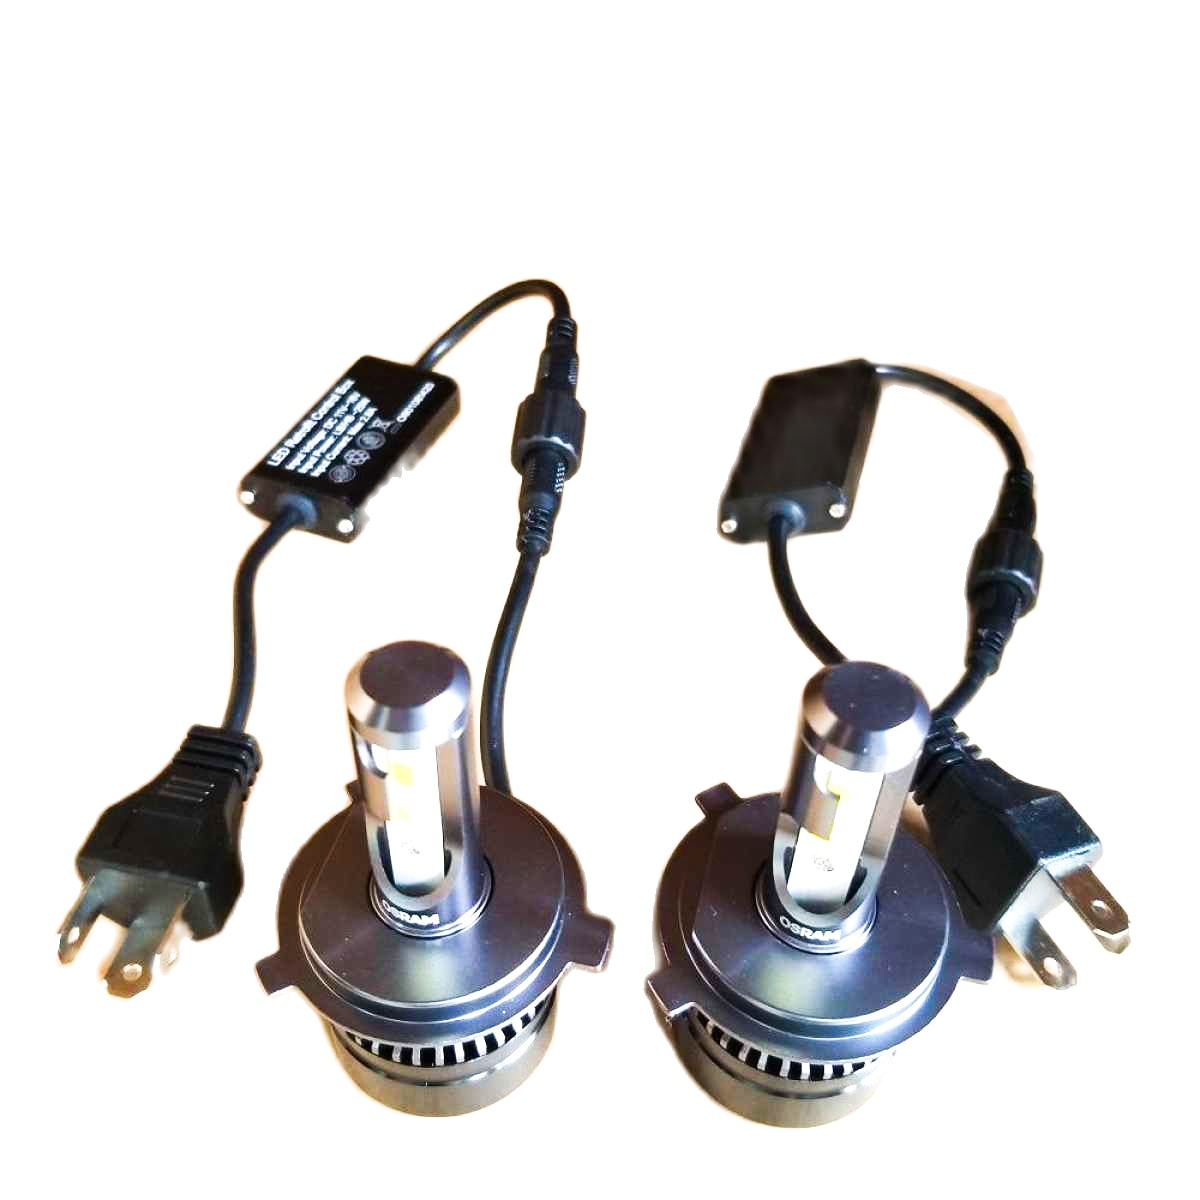 OSRAM LED HL Headlight Retrofit - H4 9003 Hi/Low 6000K